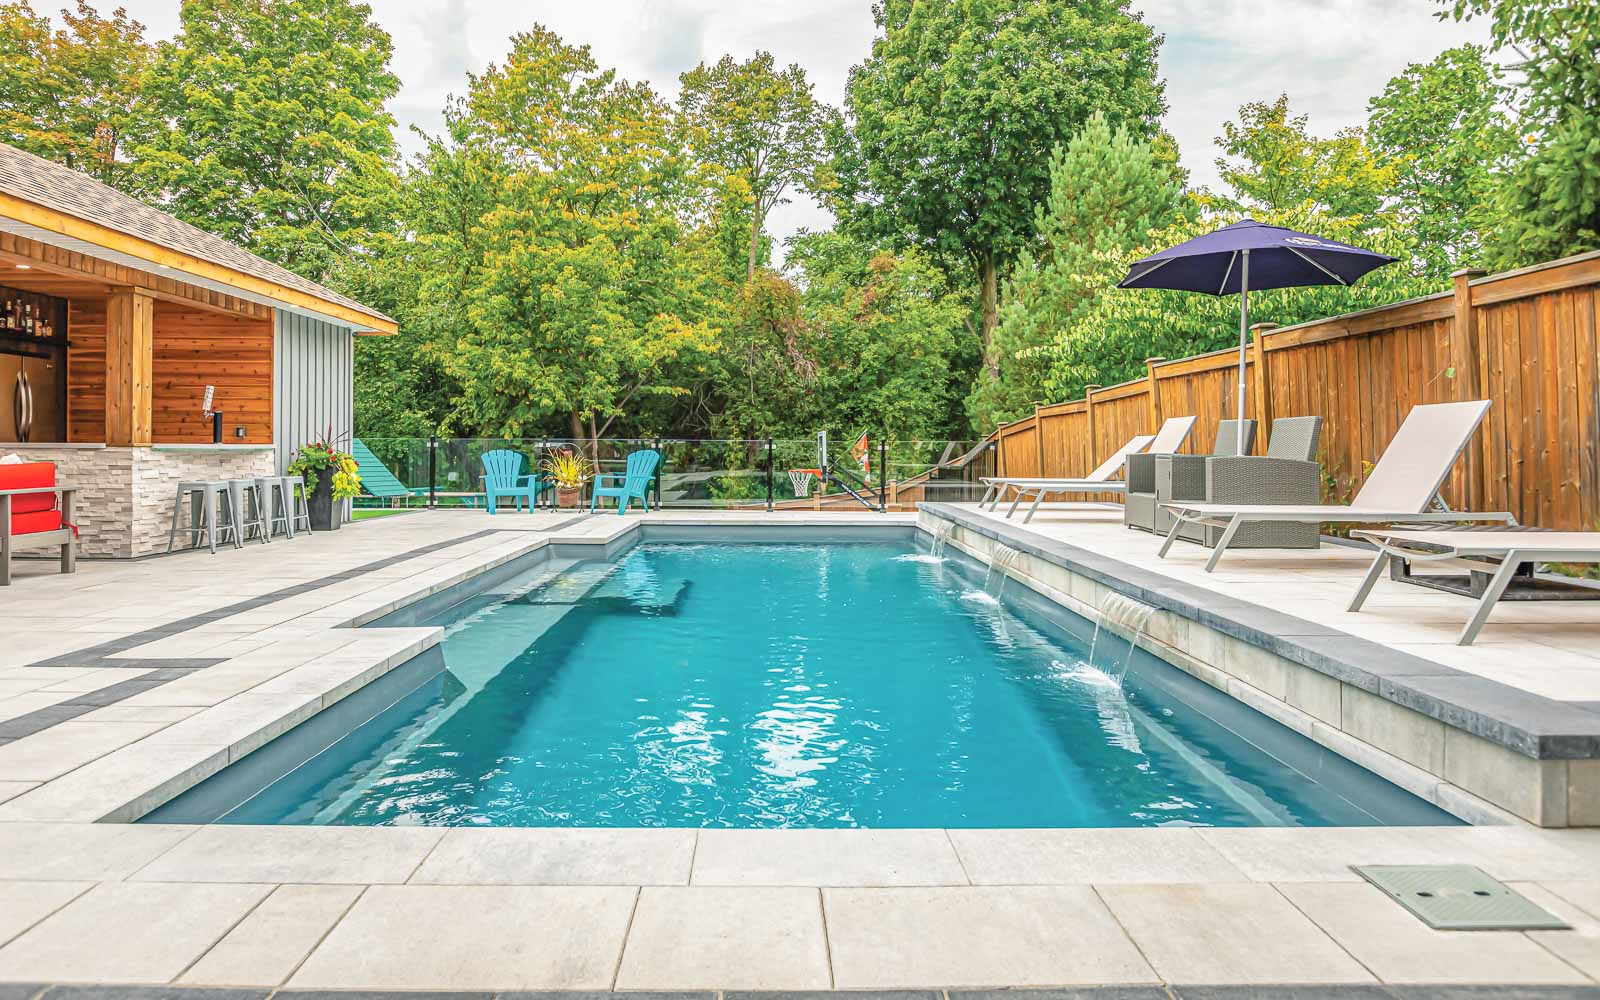 Leisure Pools Elegance large rectangular fiberglass swimming pool